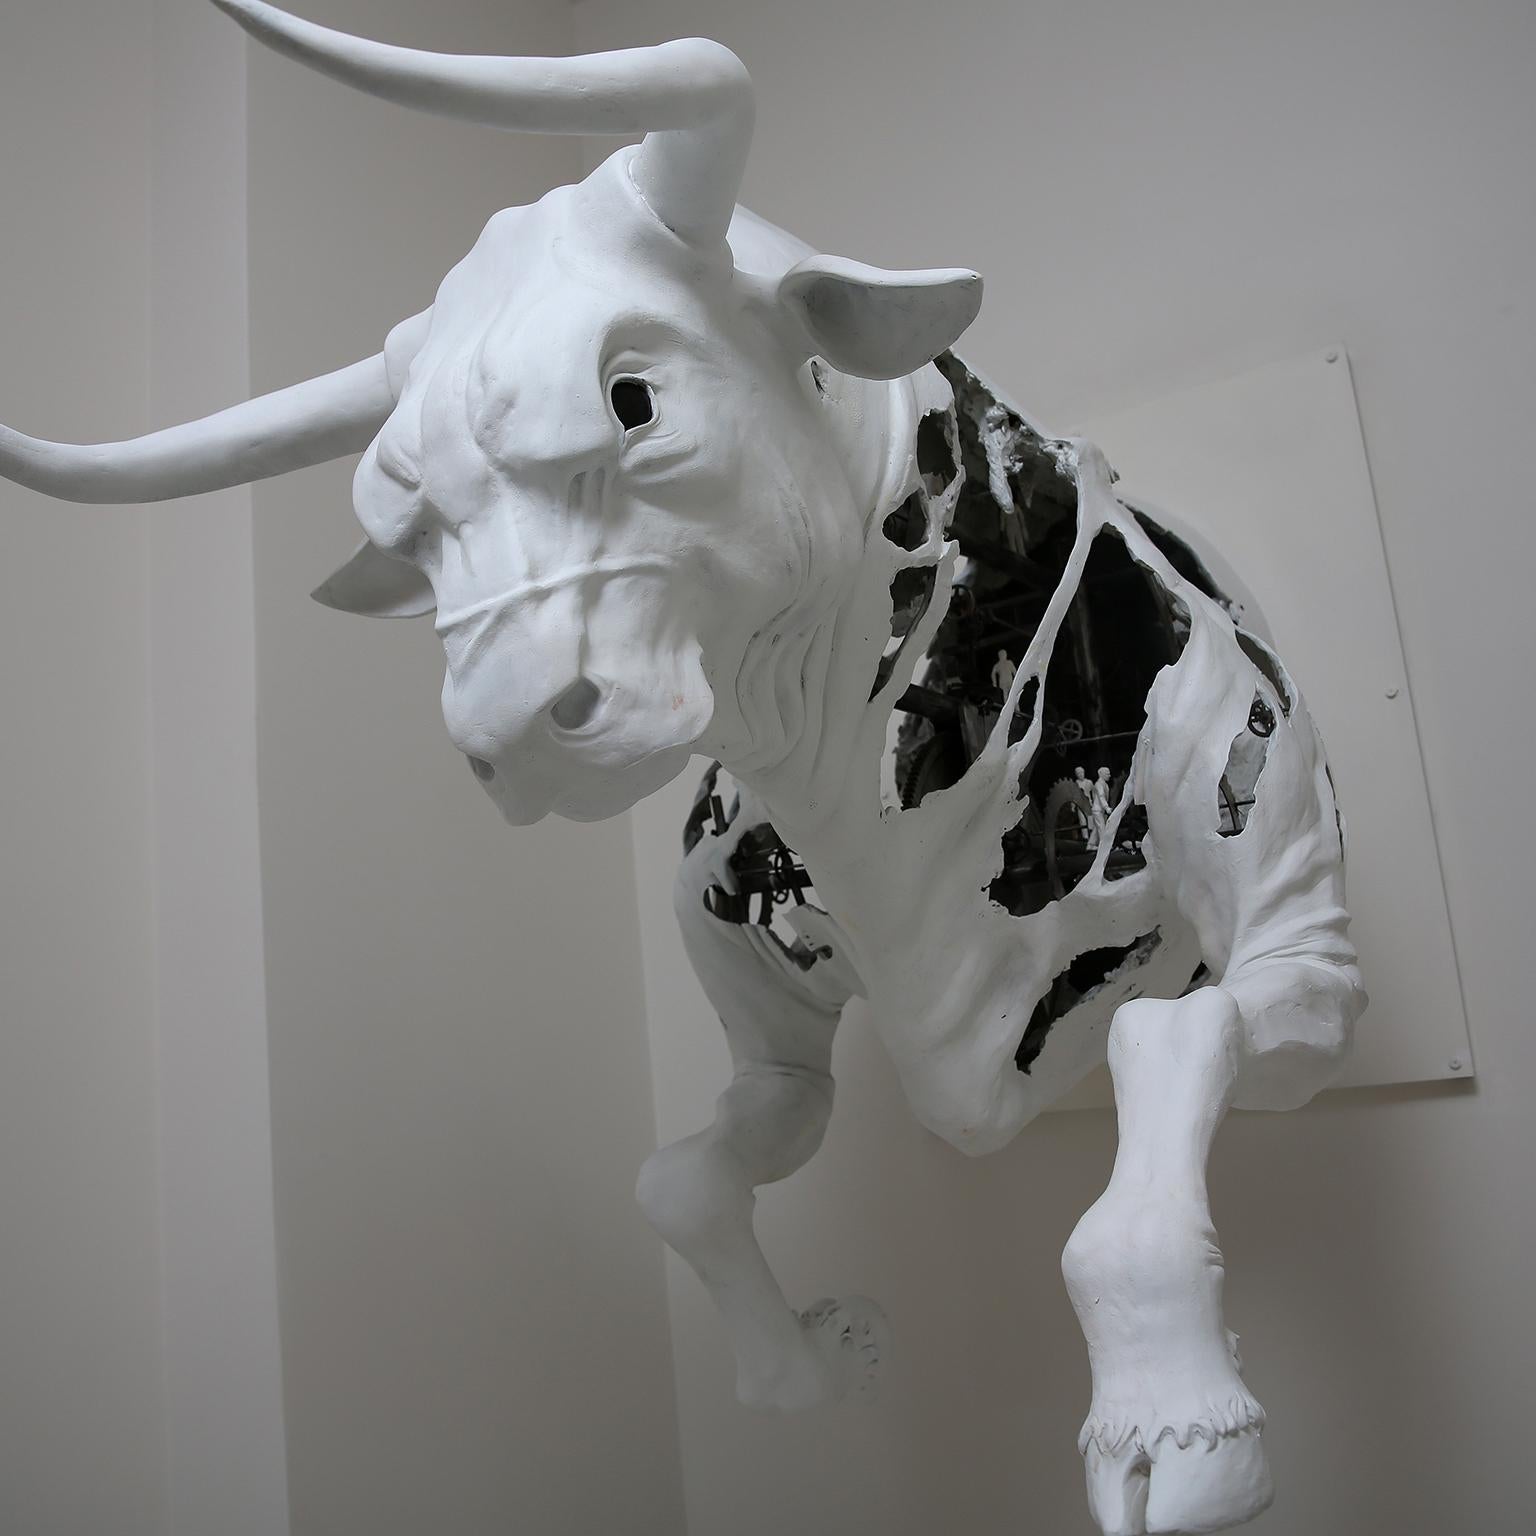 The Bull by Hobbes Vincent. White plaster and steel sculpture. Bull Bear Market 4